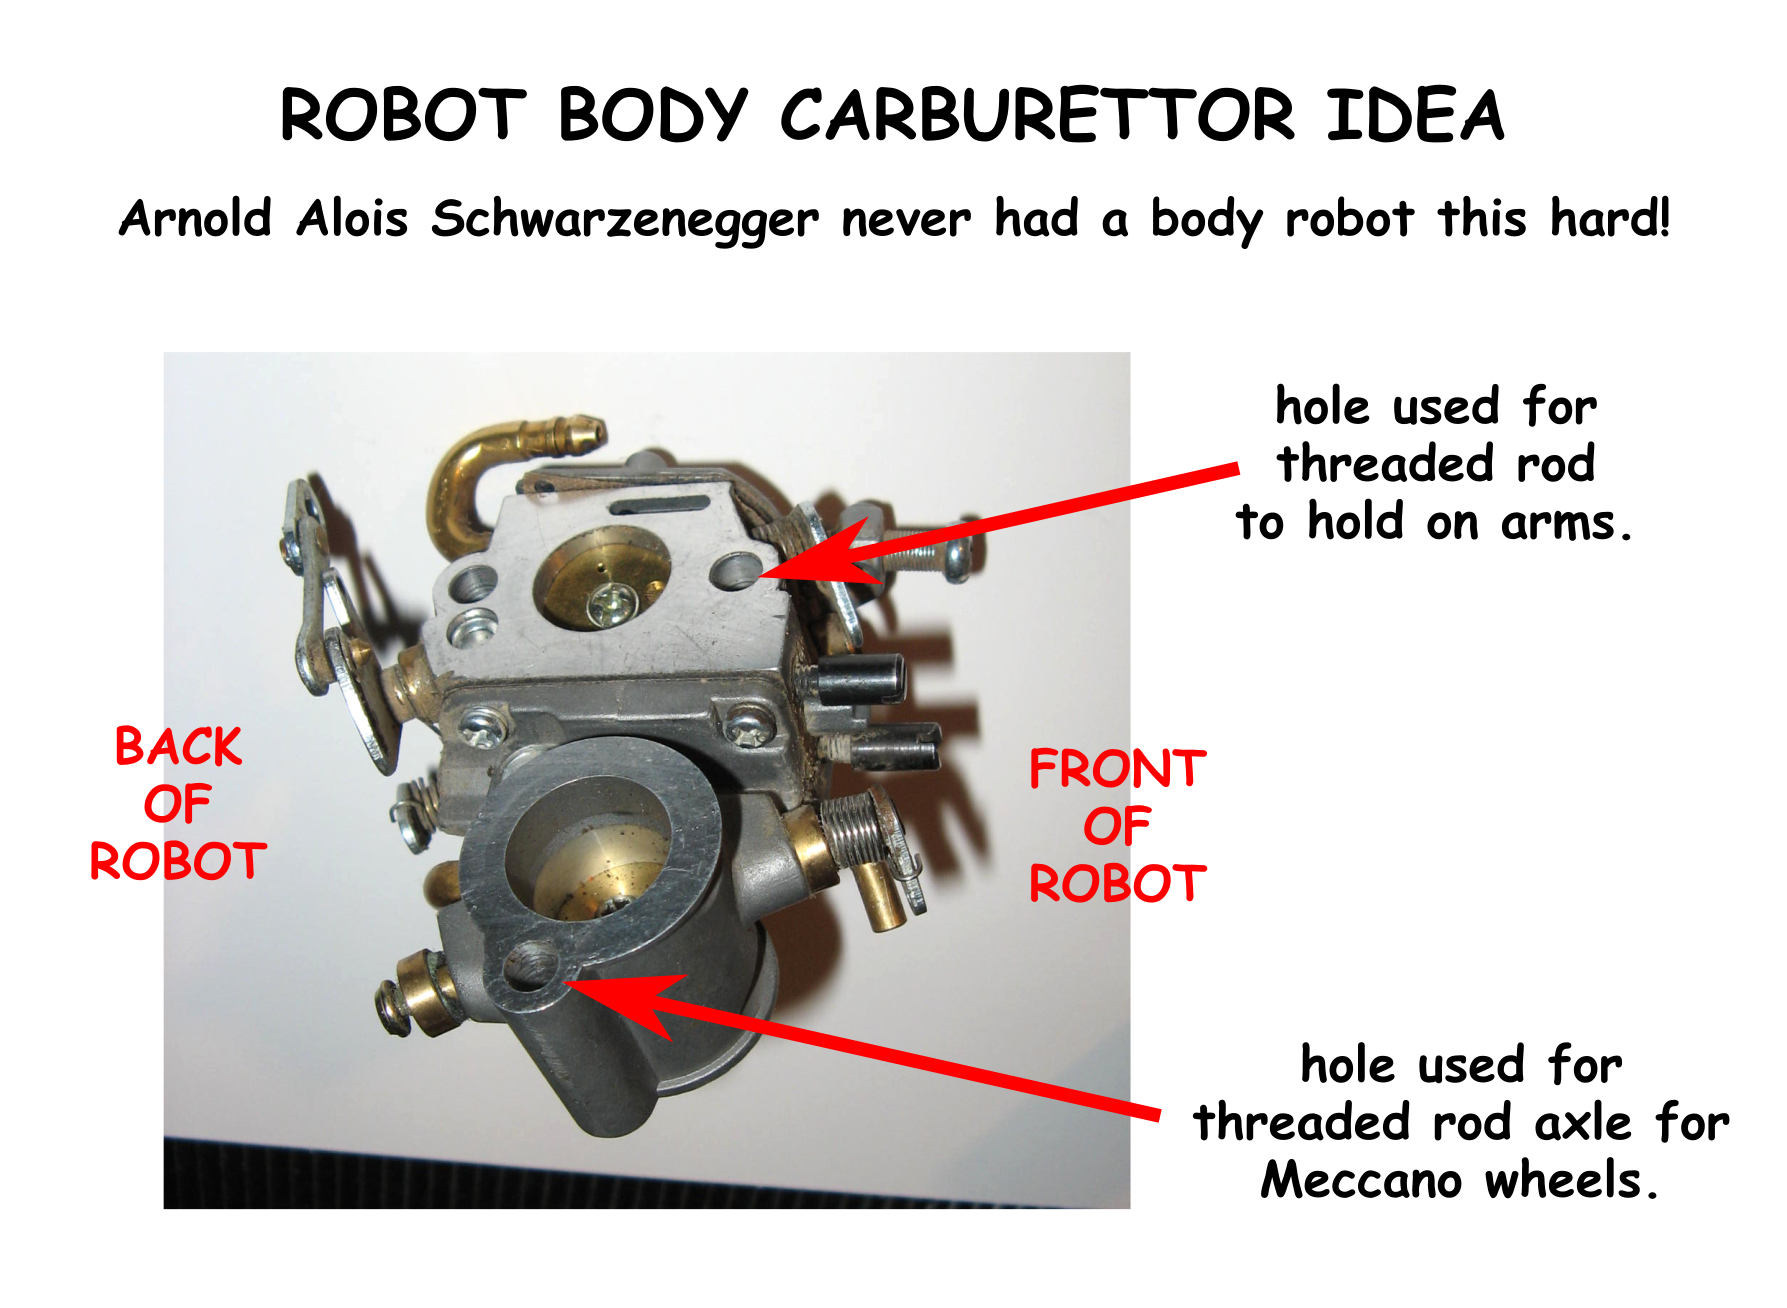 Carburettor Body Idea 1.png